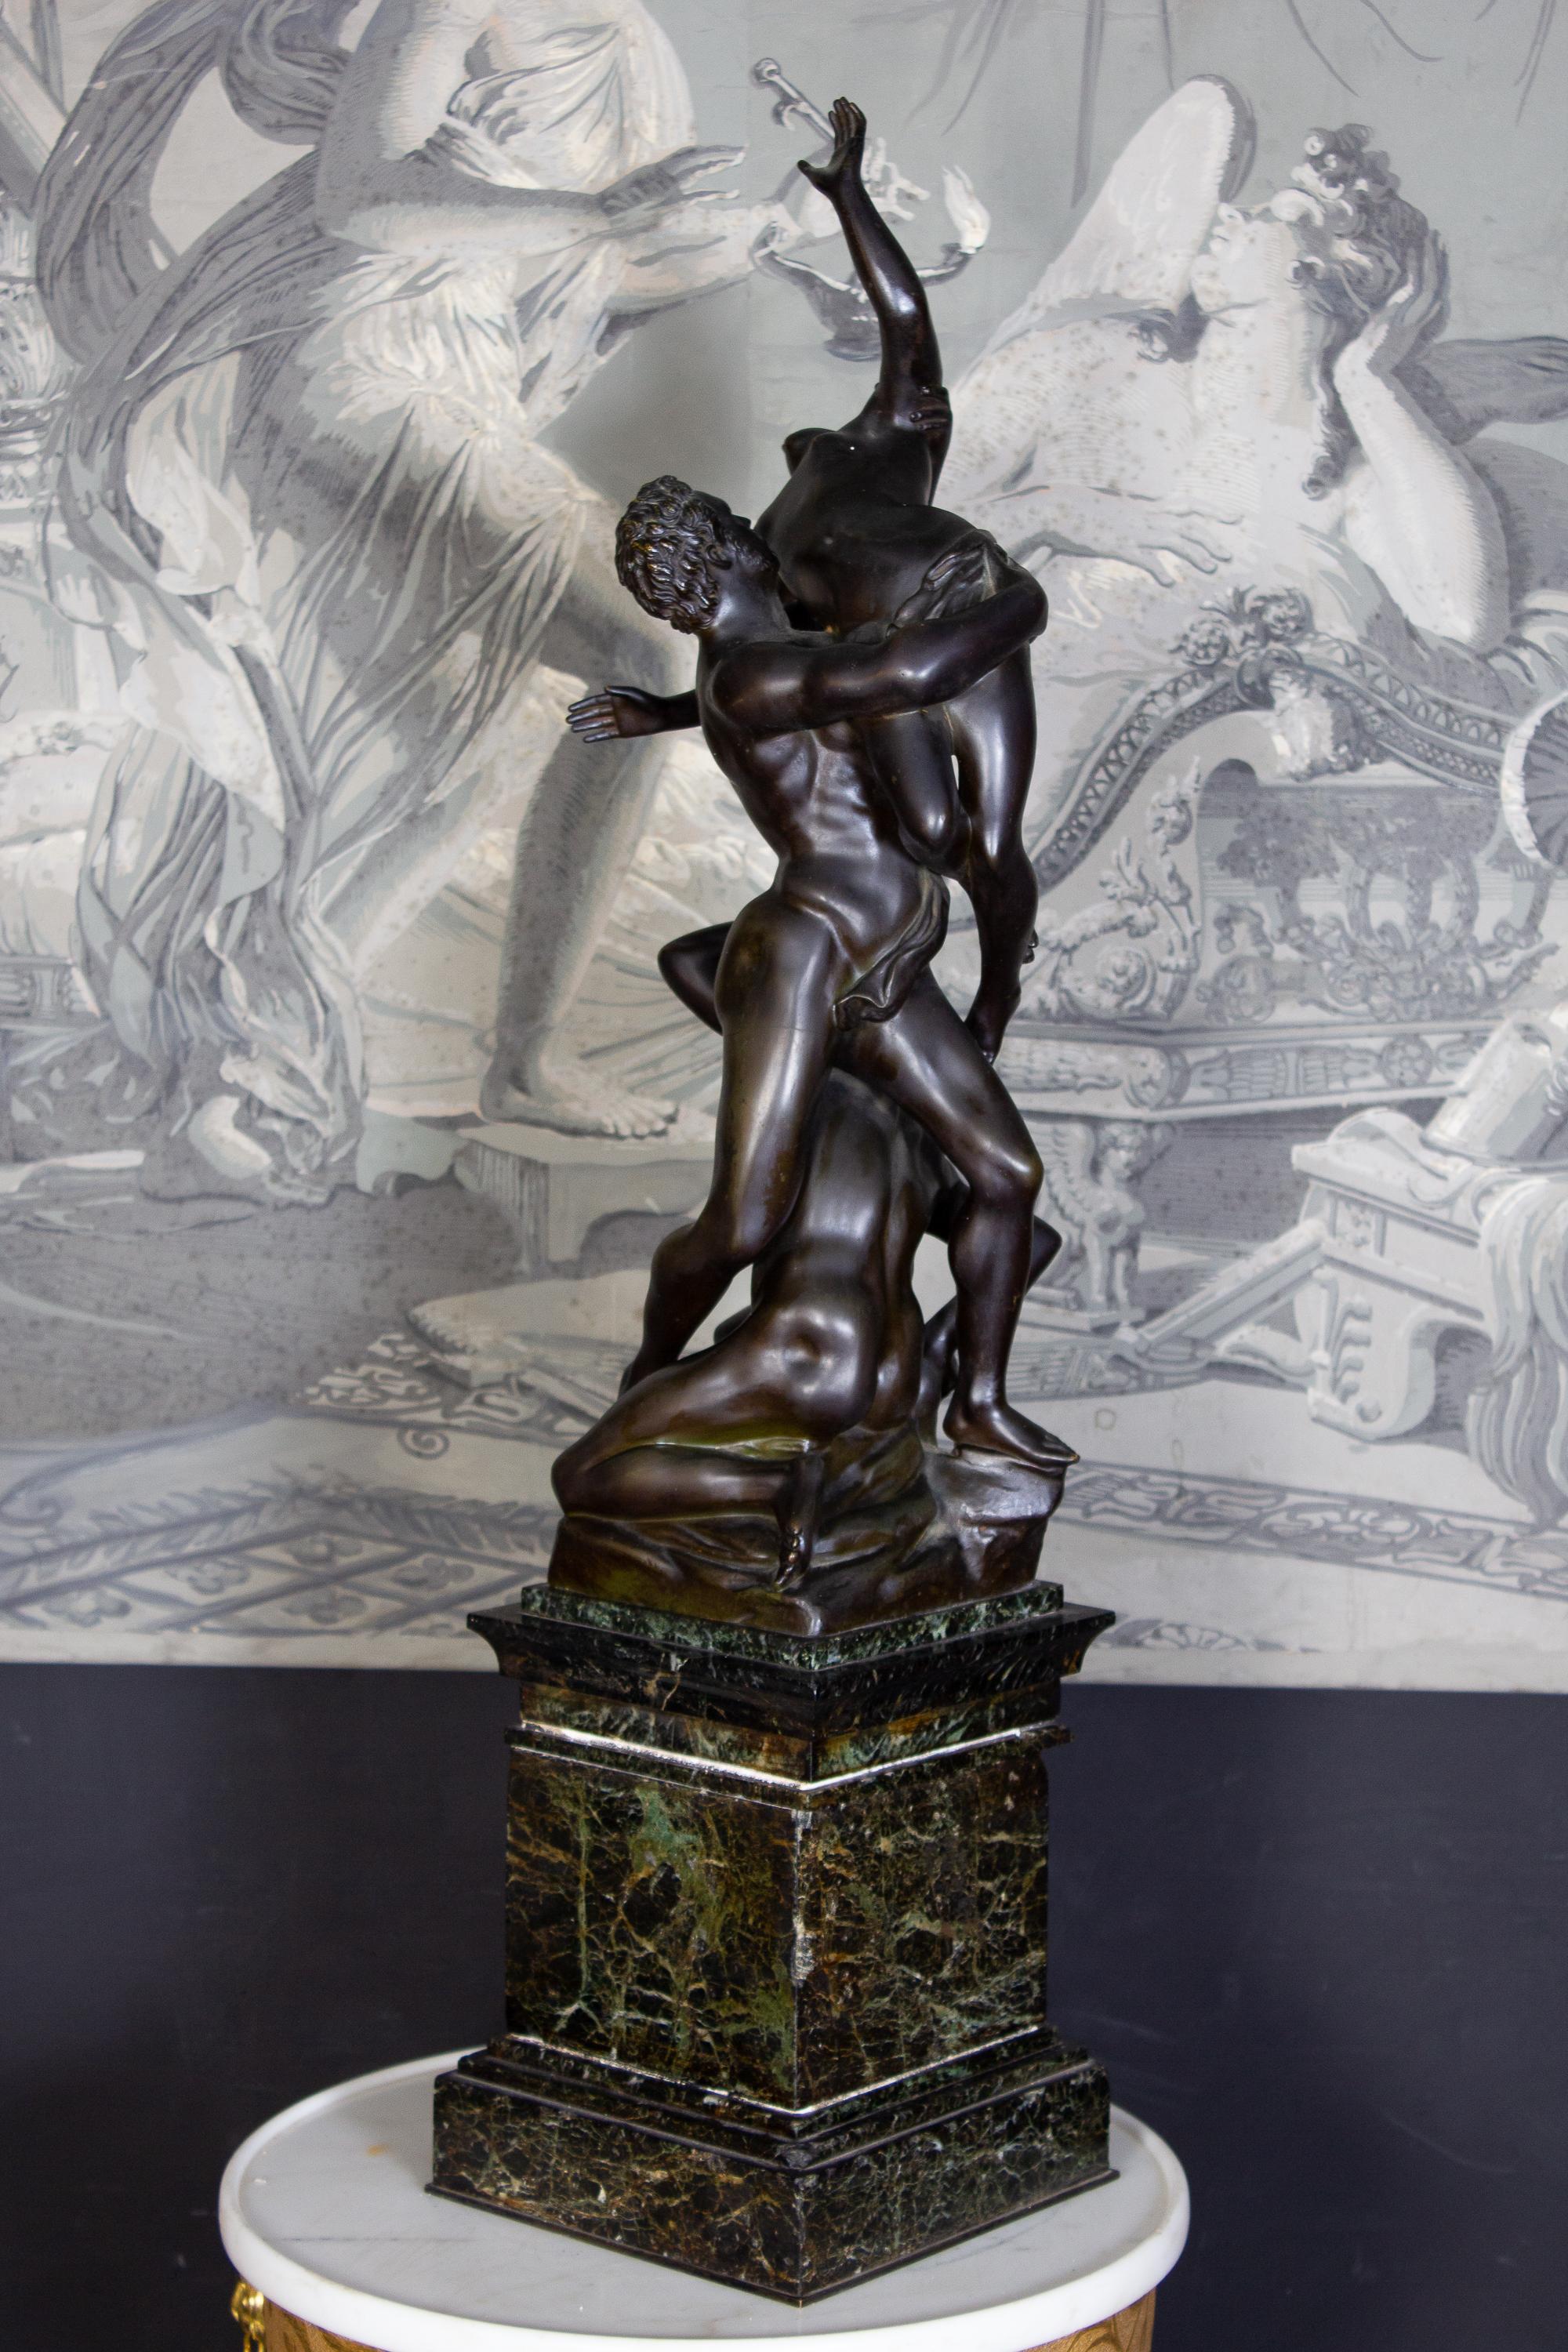 The Rape of Sabine Iconic Bronze Sculpture 1930 - Gold Nude Sculpture by Jean de Boulogne (Giambologna)